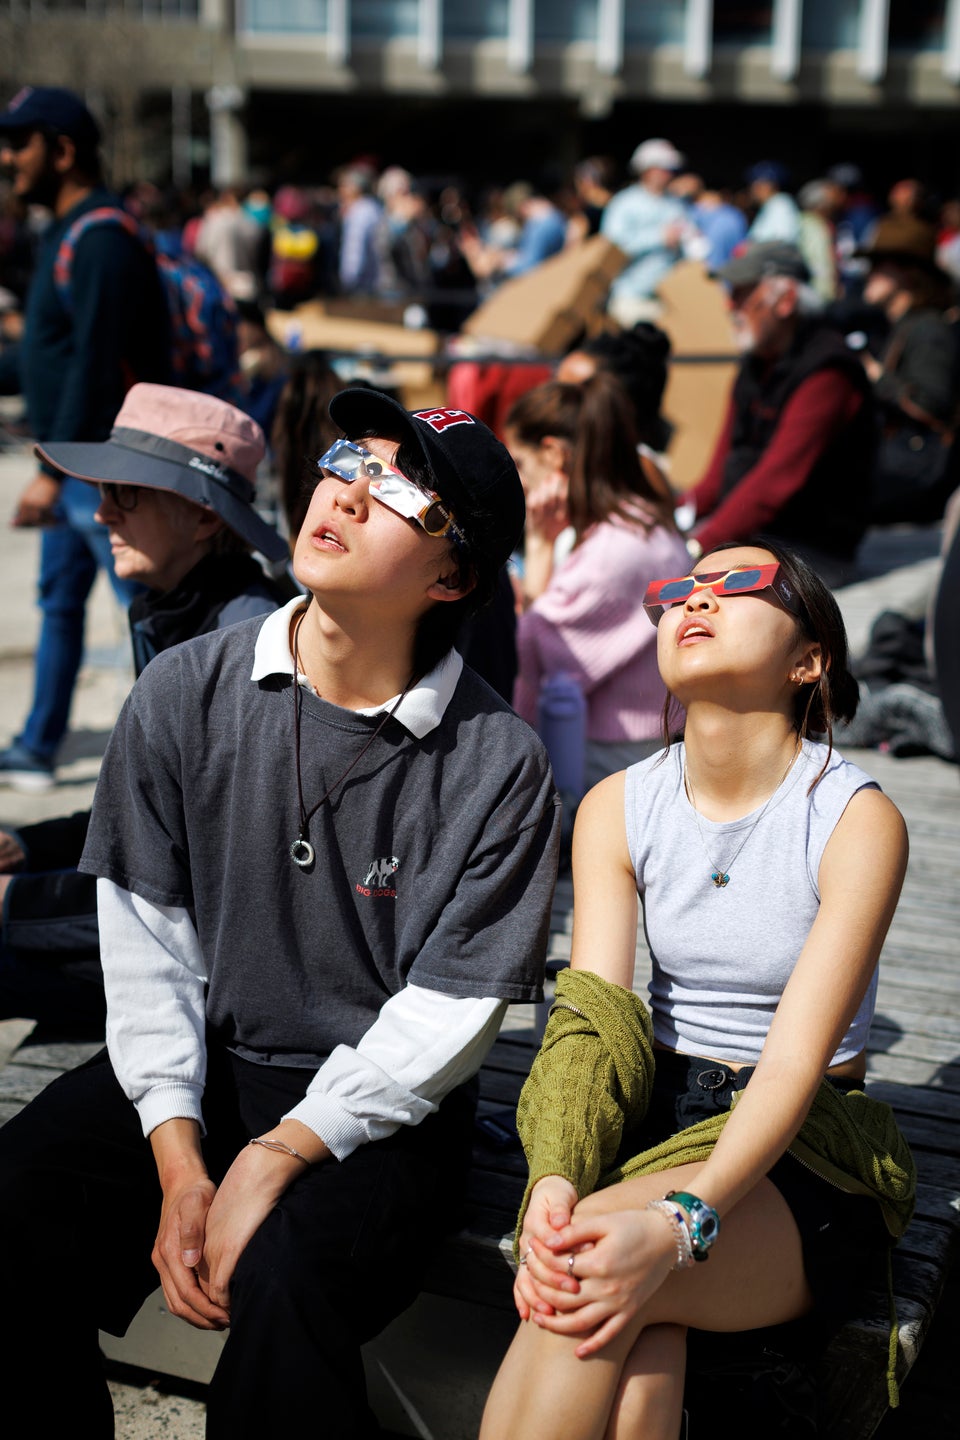 Two people wearing solar glasses look skyward in awe.